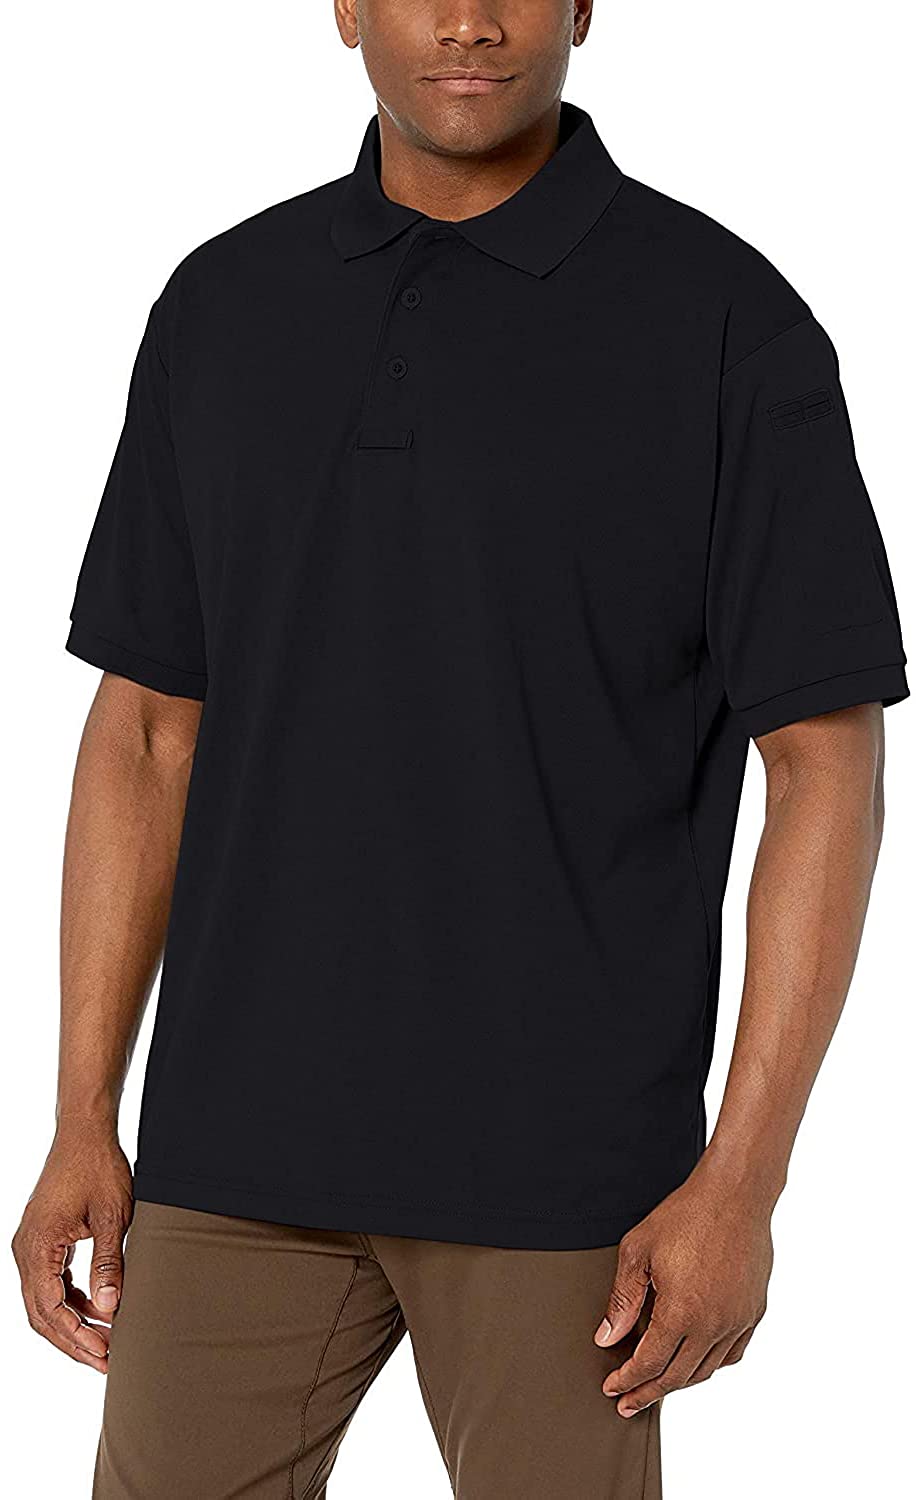 Propper Men's Uniform Polo Shirt | eBay